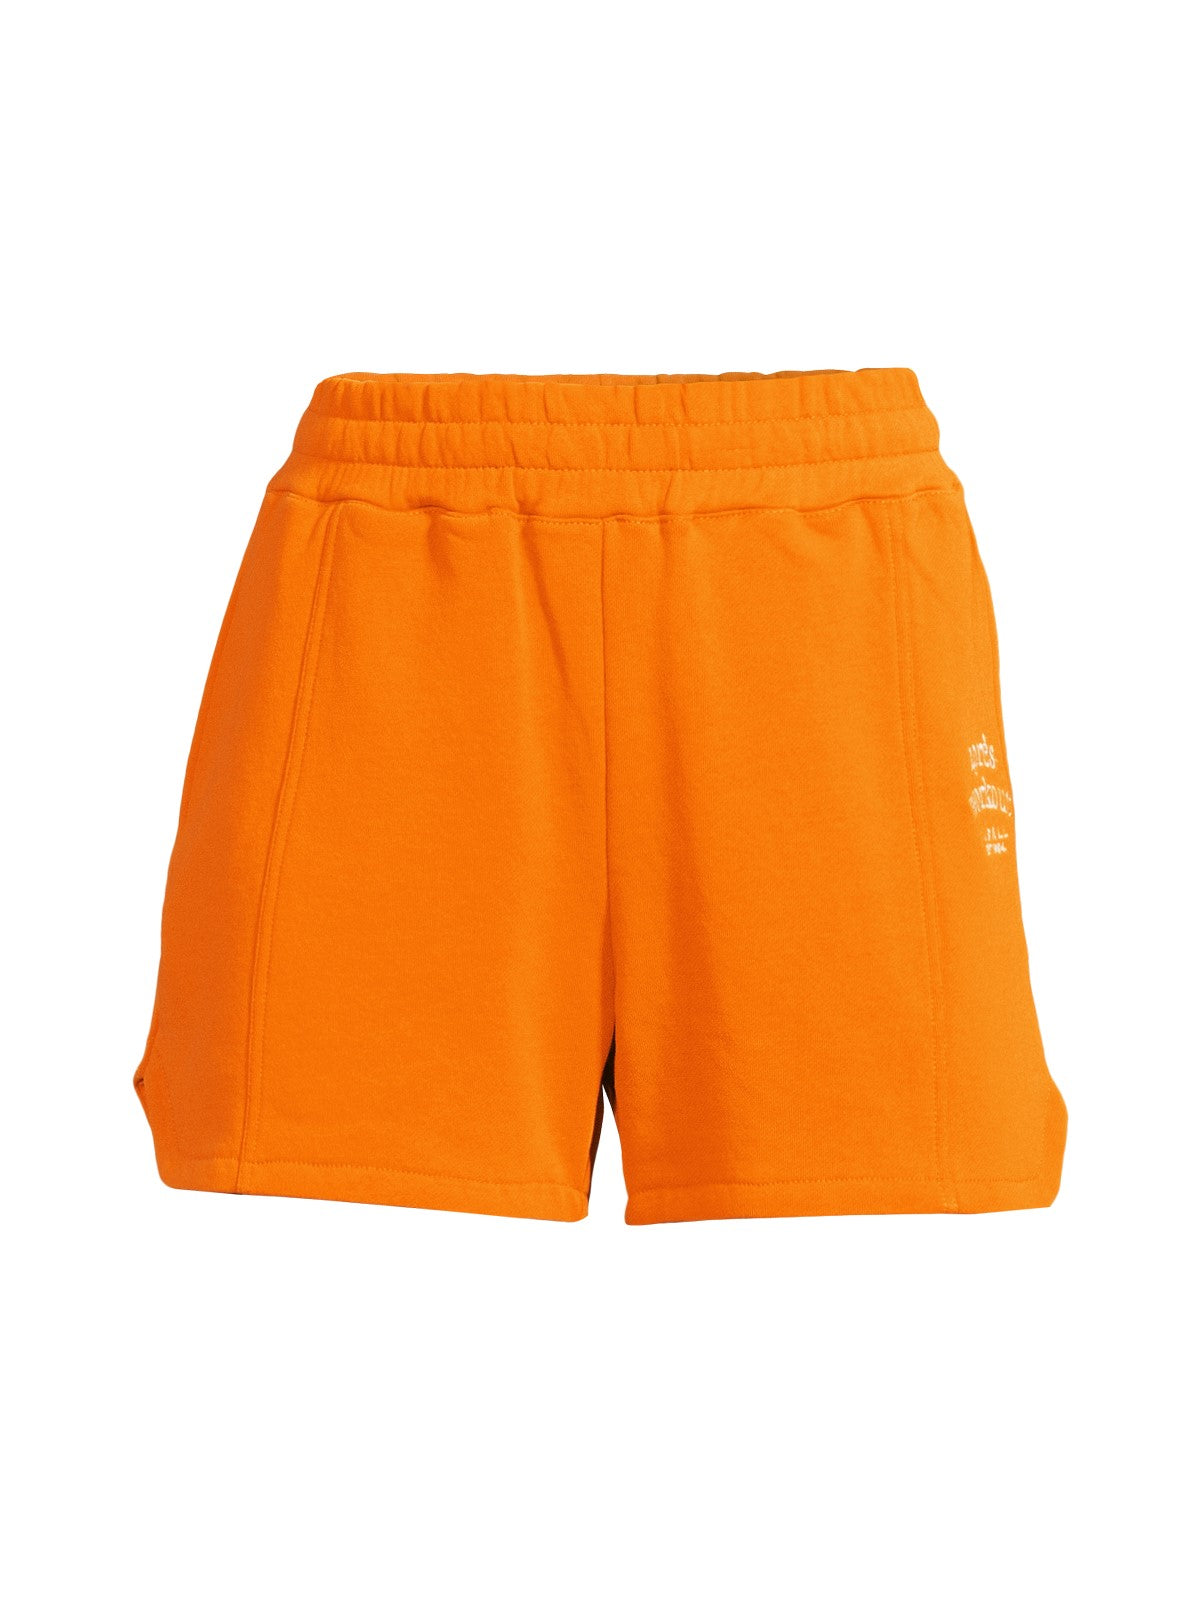 Szorty CASALL Terry Spring Shorts pomarańczowy